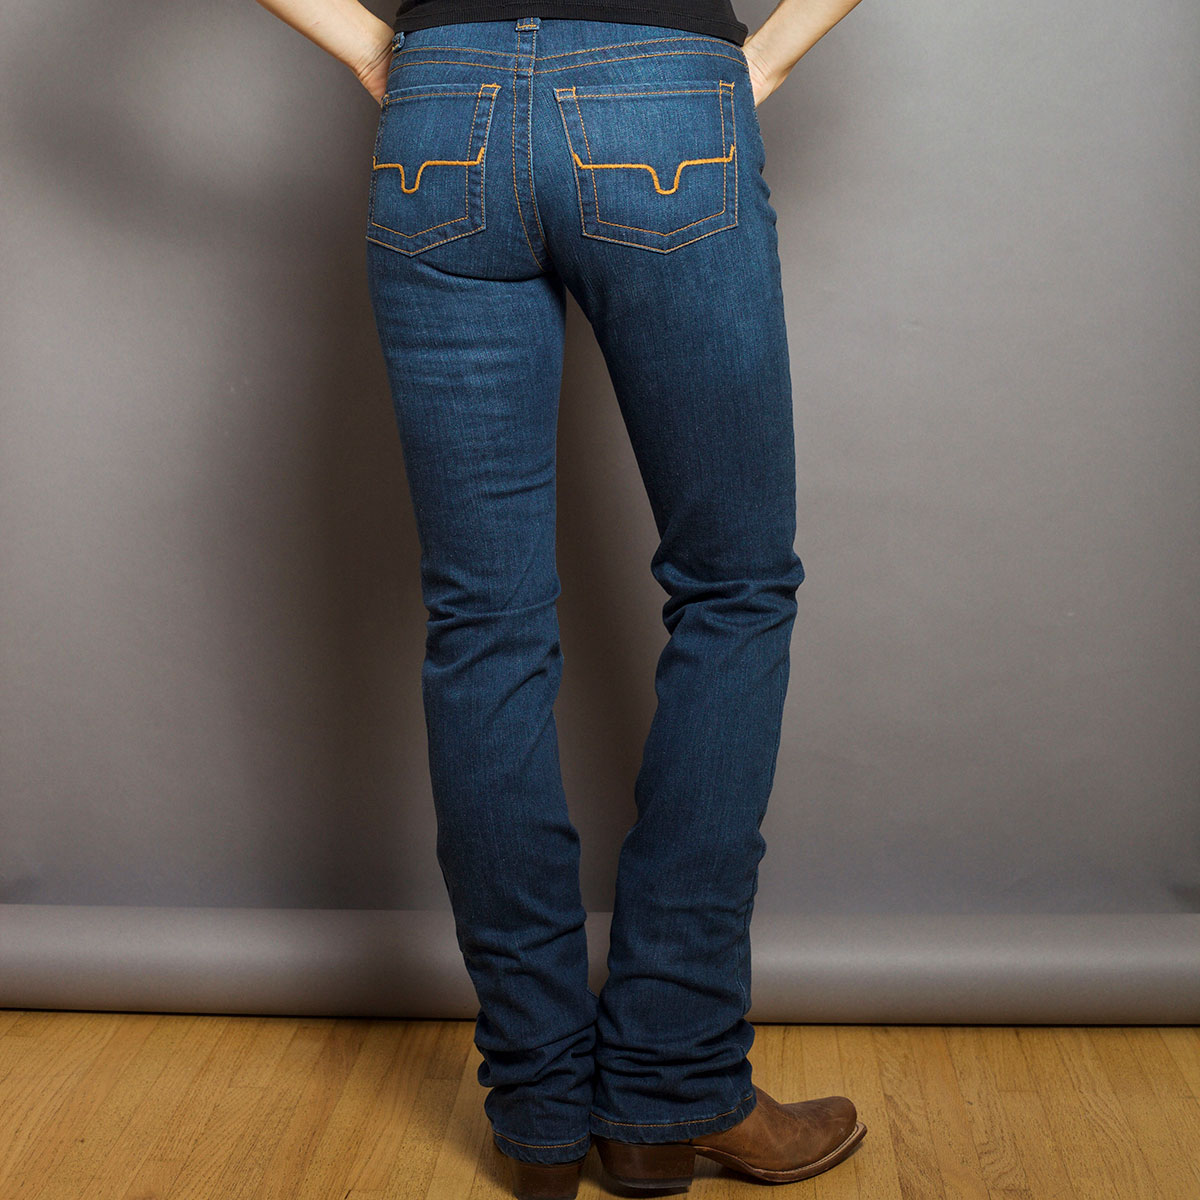 kimes jeans on sale